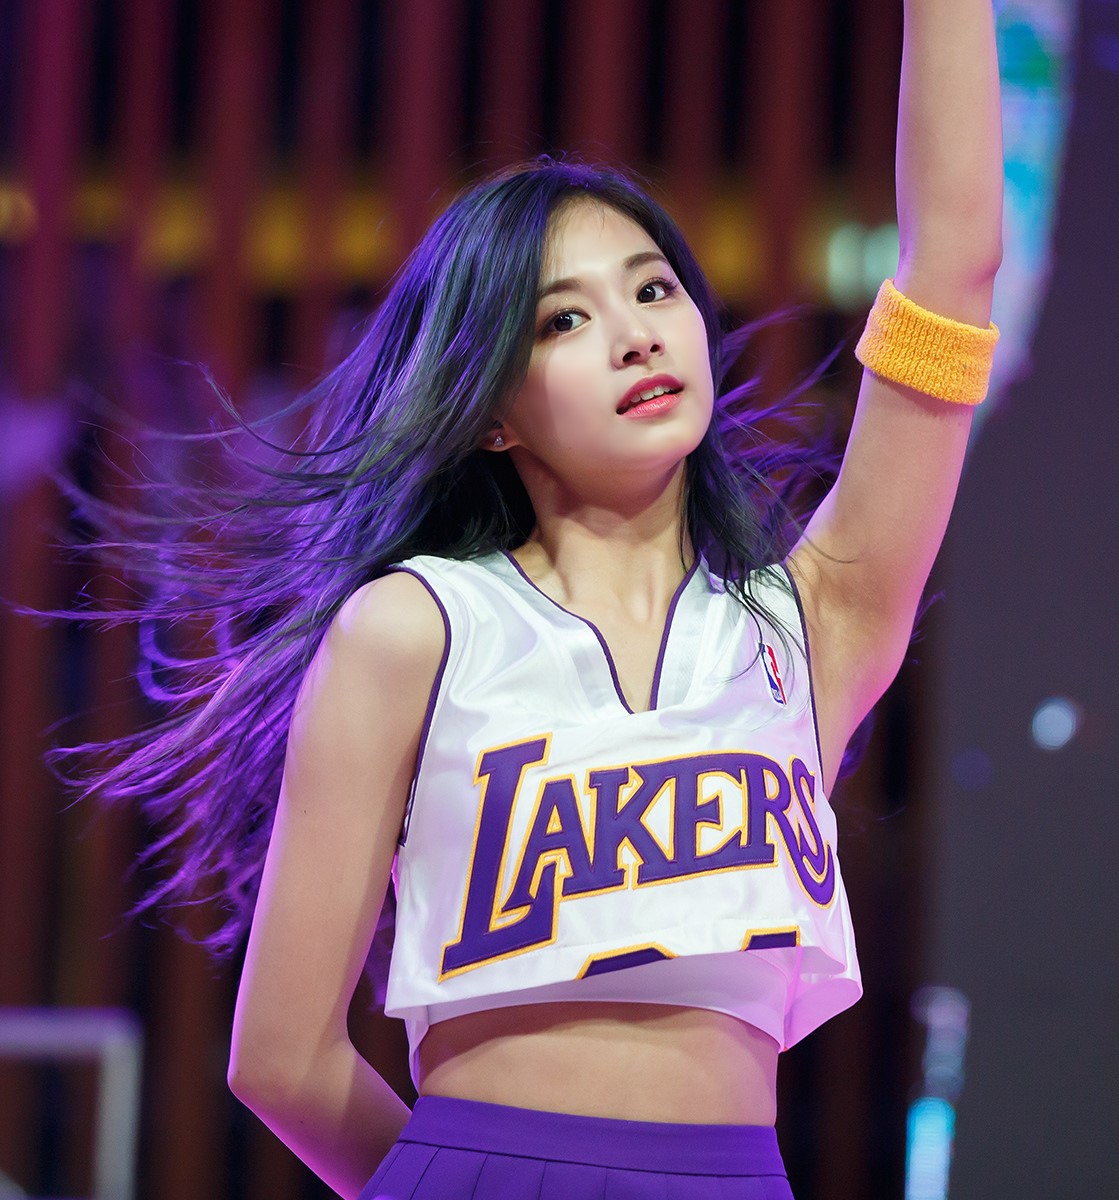 2016-Tzuyu- Seokyeong University Festival (1) Laker Cheer Leader Outfit.jpg